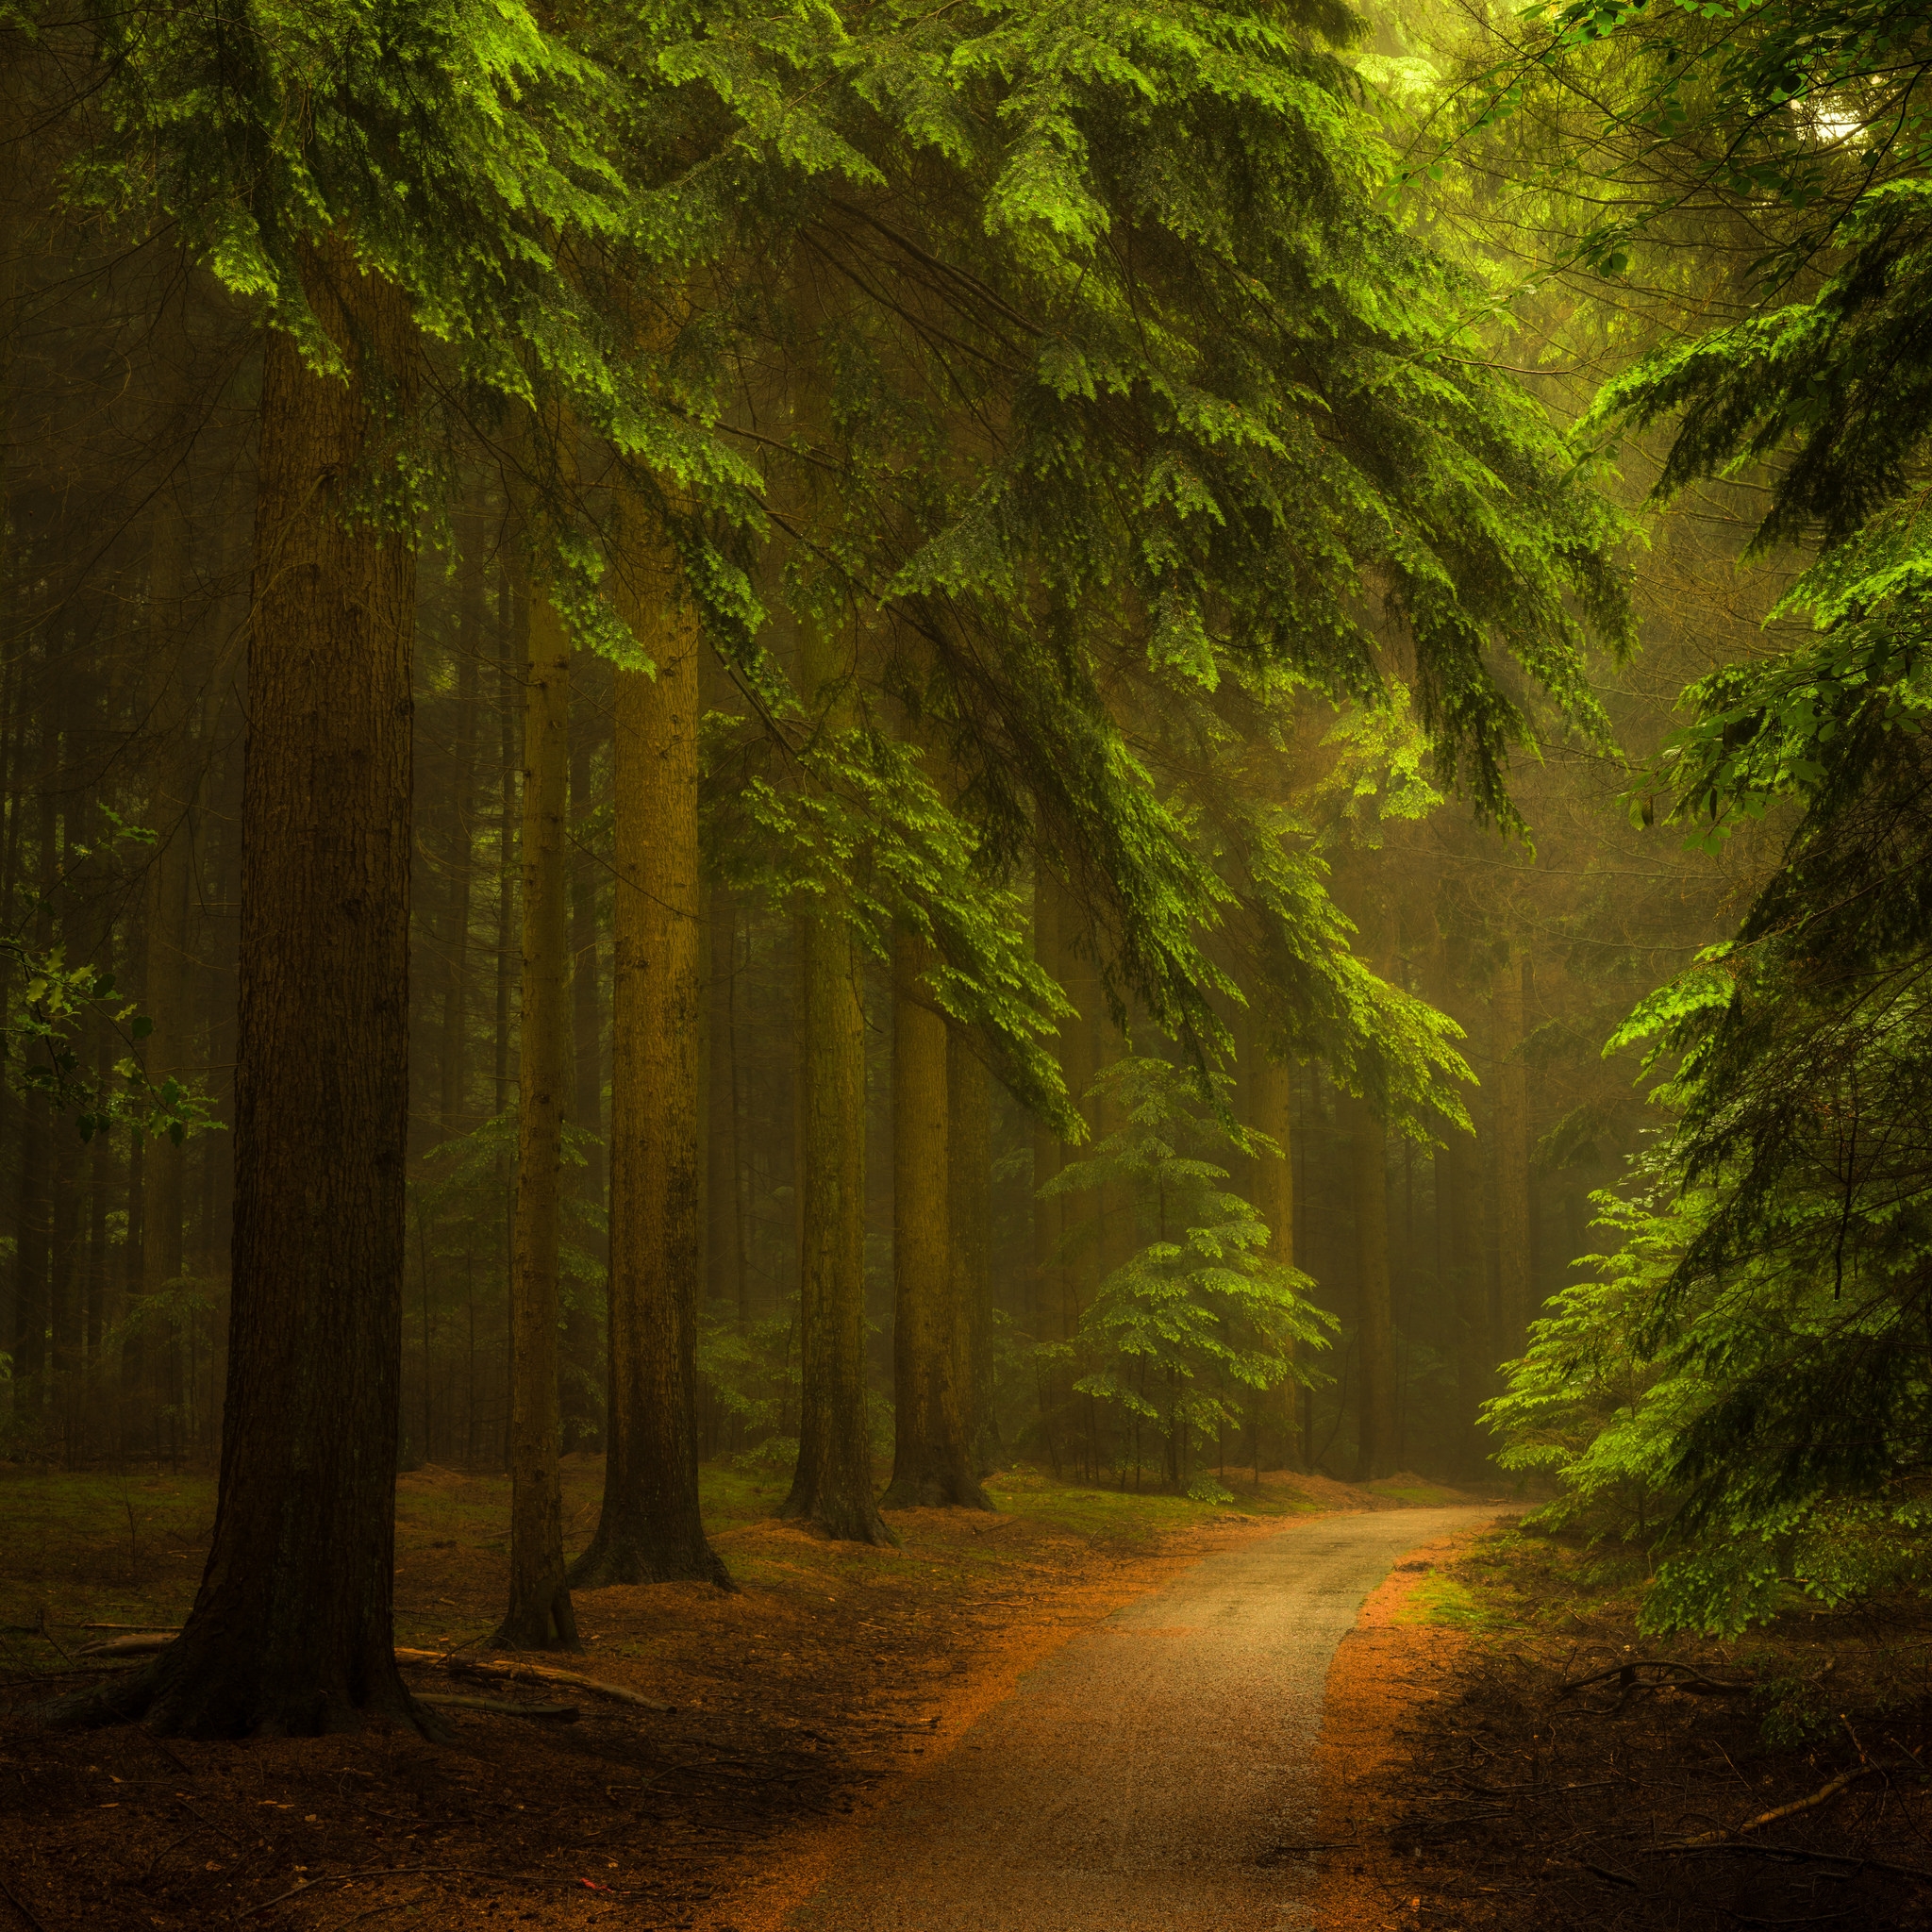 Фото бесплатно дорога по лесу, лес, туман в лесу